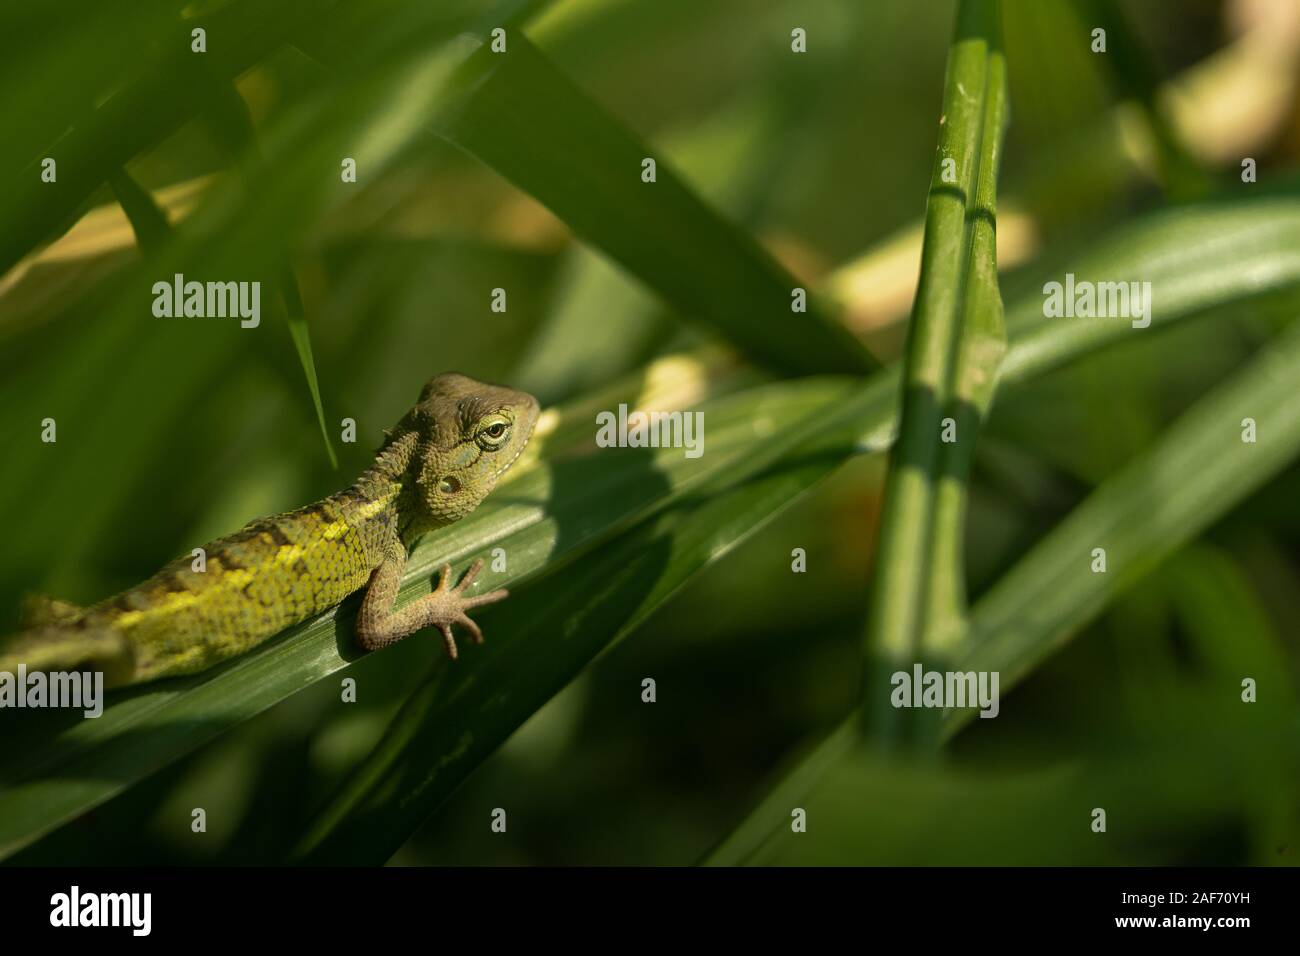 a chameleon in a dense green foliage ready to strike  Stock Photo